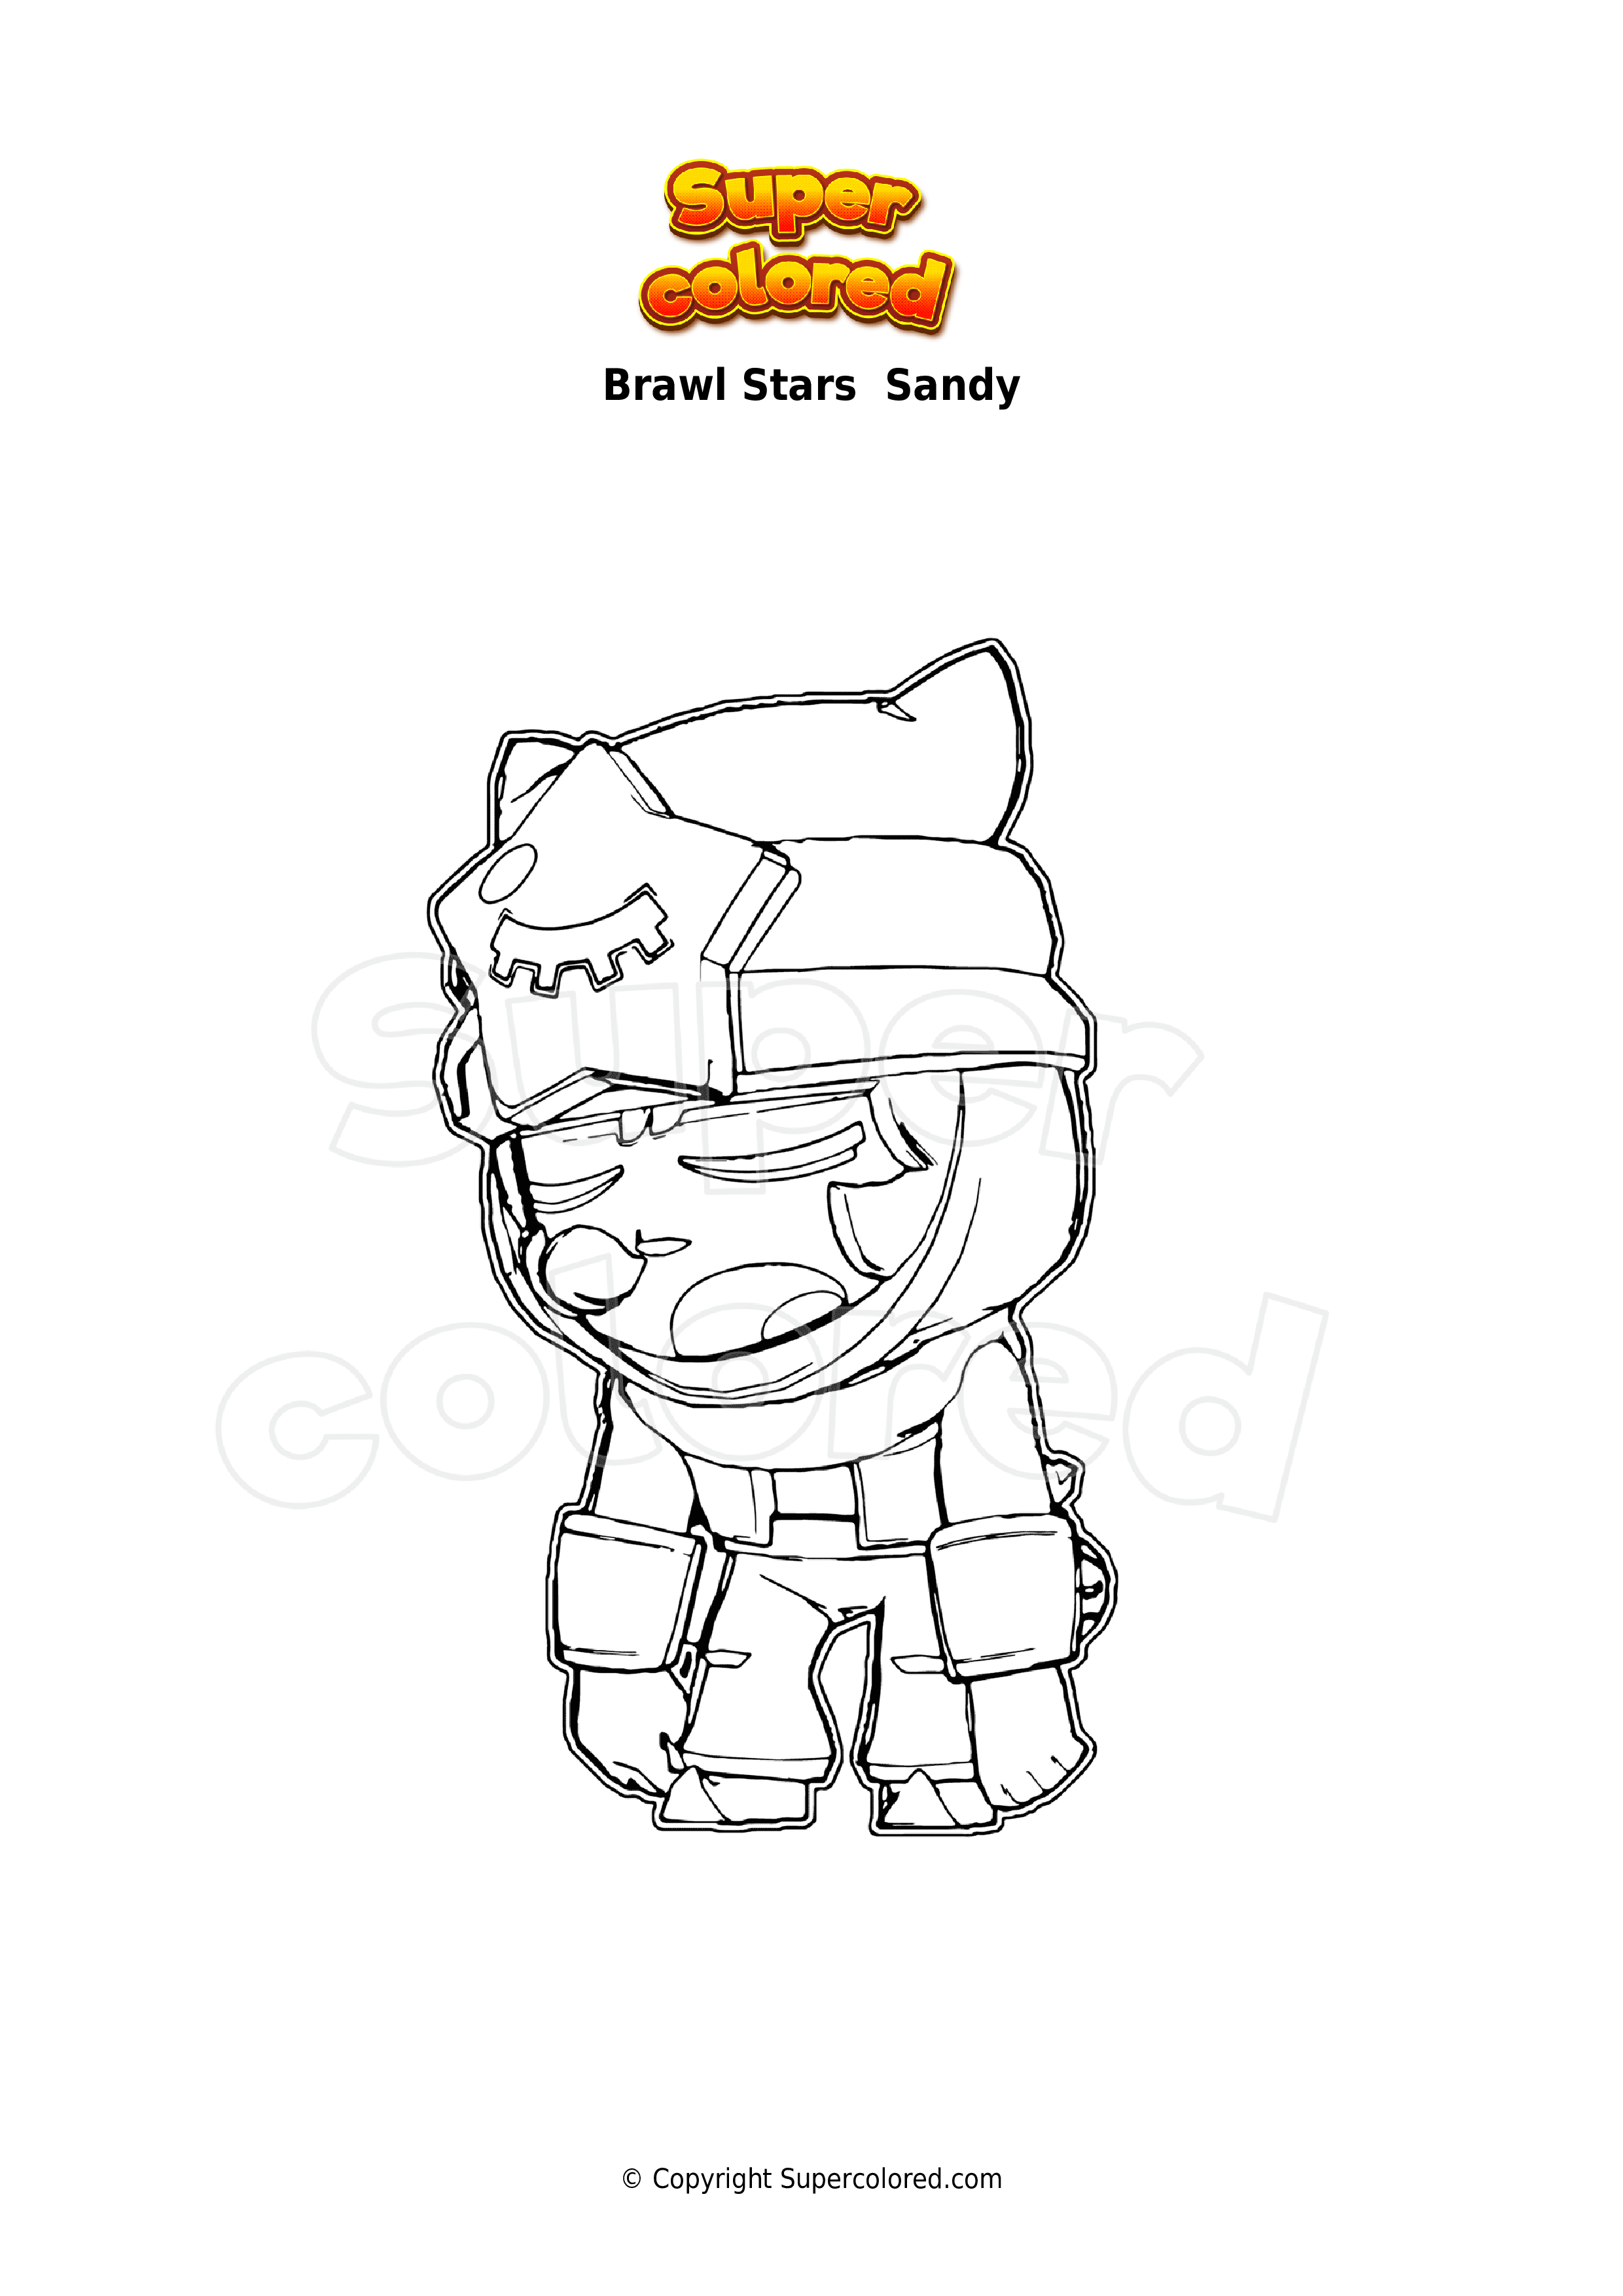 Coloring Page Brawl Stars Sandy Supercolored Com - dibujos para colorear brawl stars sandi